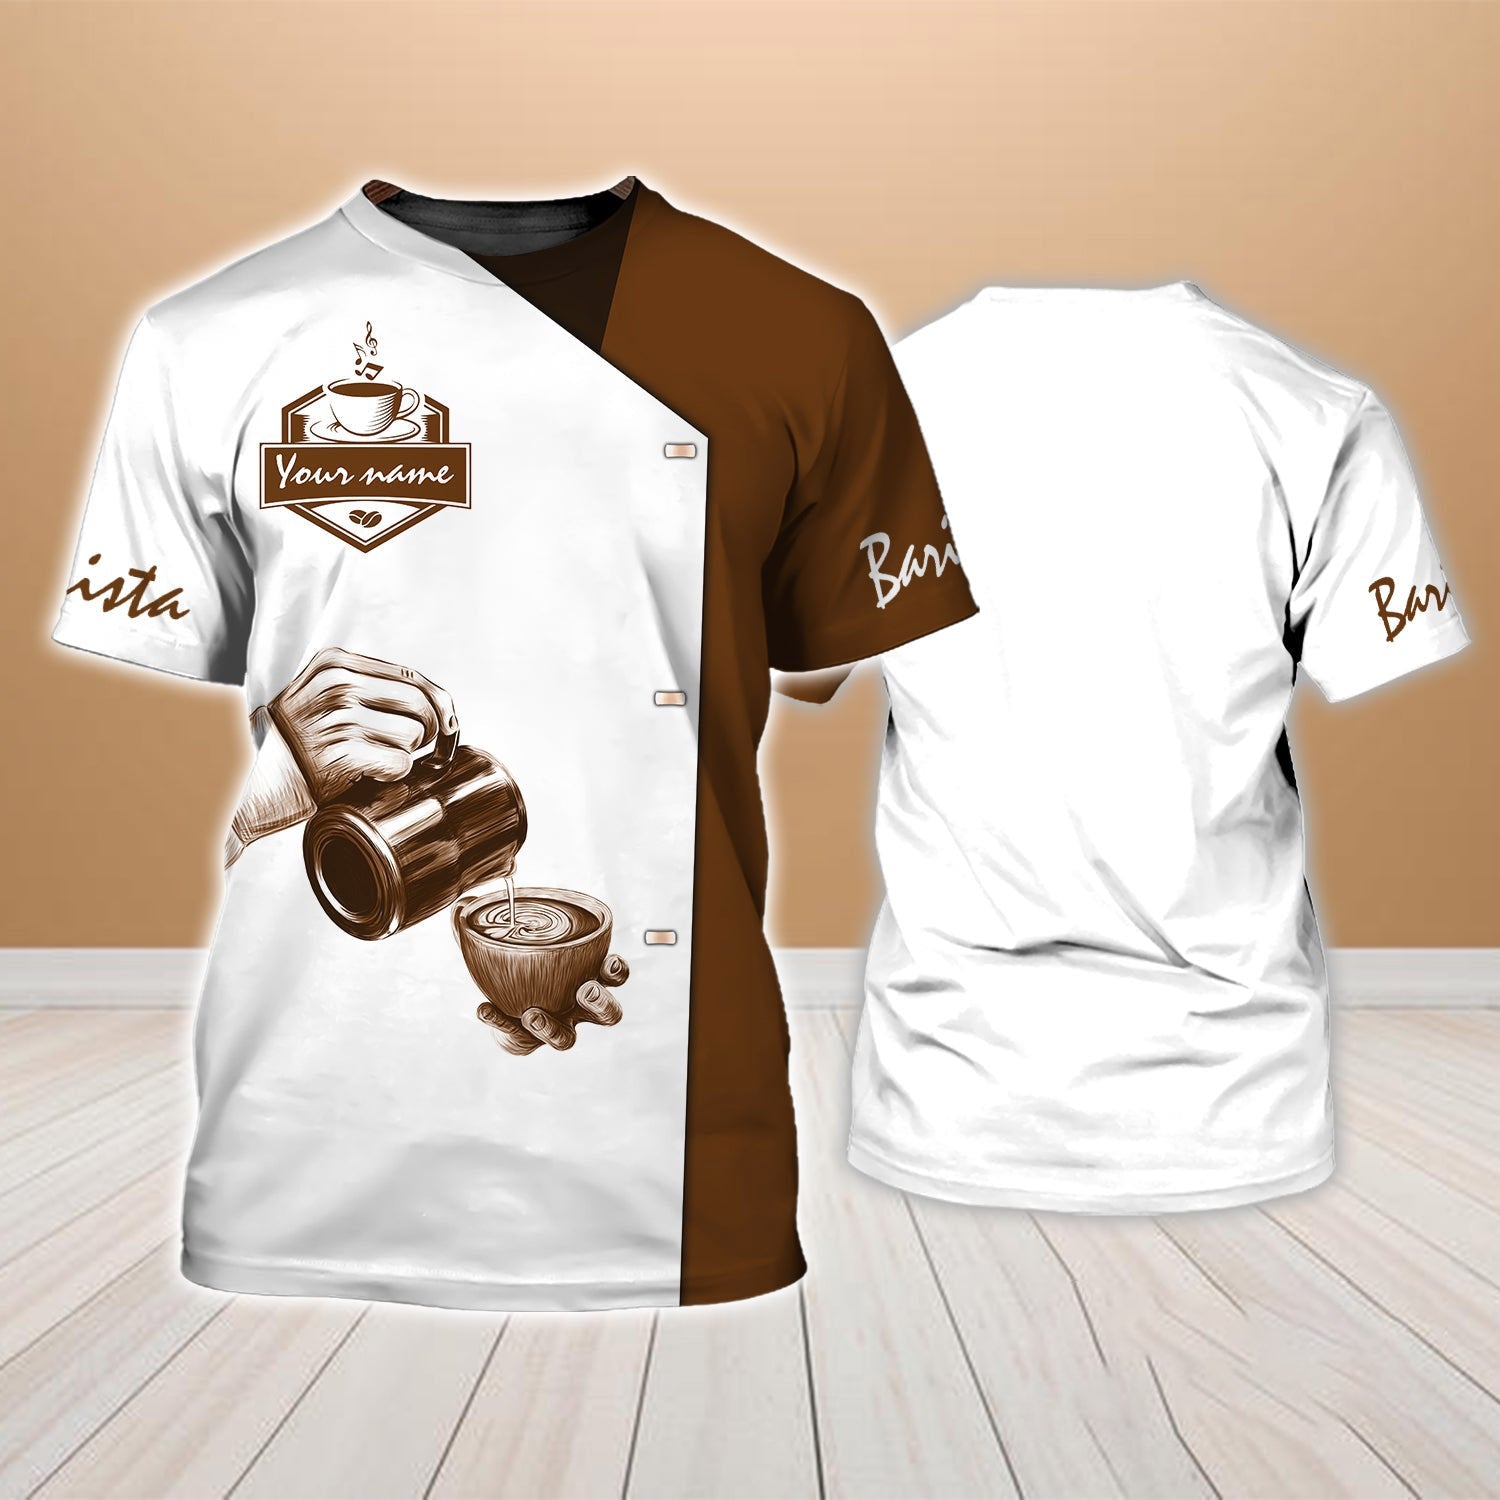 Customized Barista Brown Tshirt Barista Hand Drawing Uniform Gift For Bartender Barista